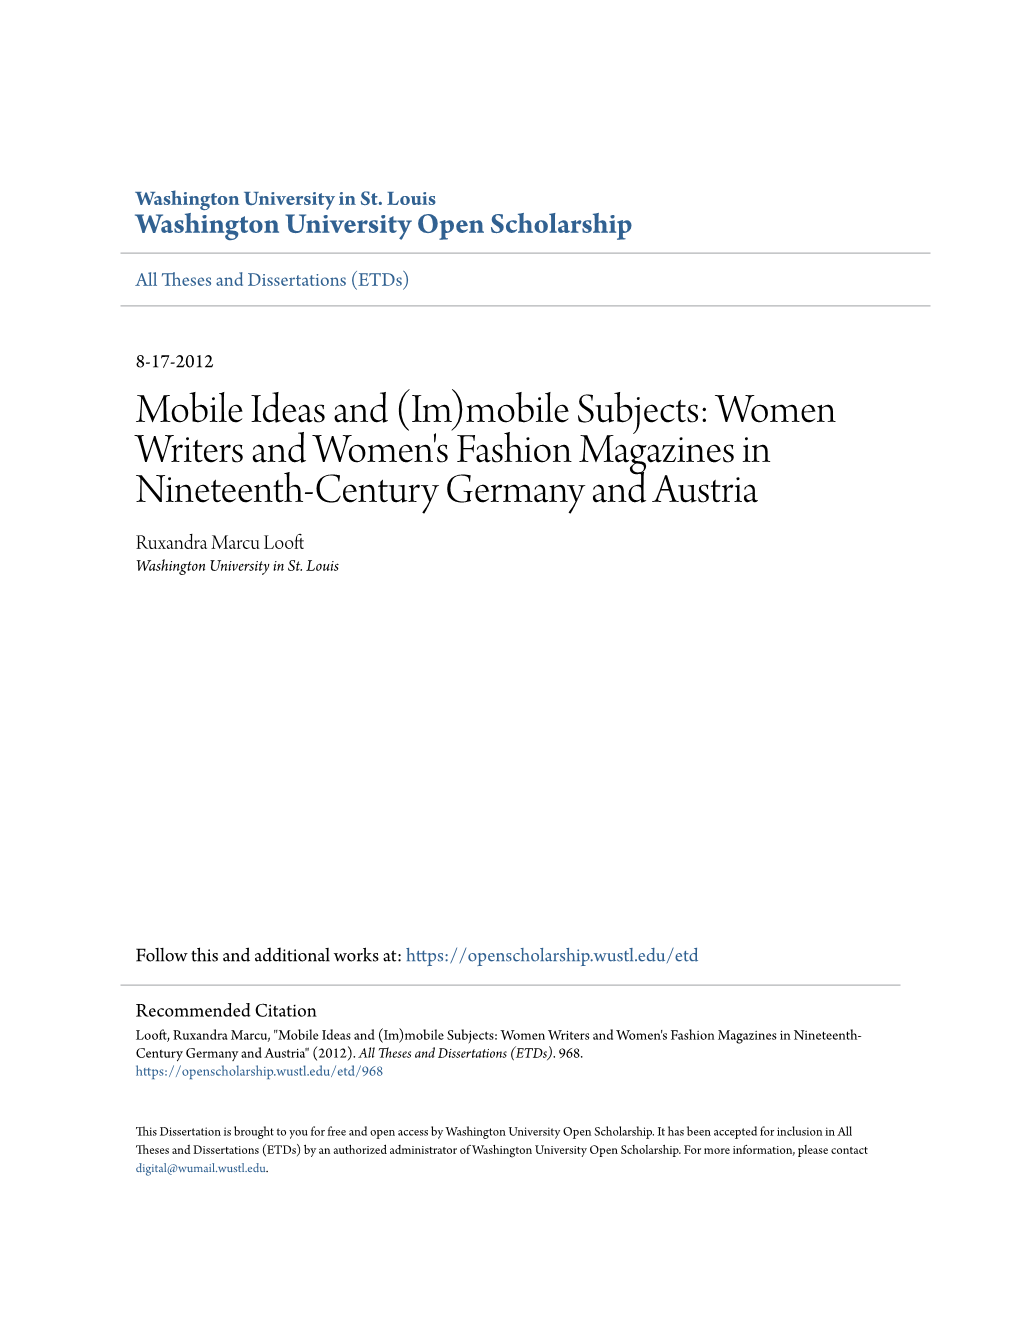 Women Writers and Women's Fashion Magazines in Nineteenth-Century Germany and Austria Ruxandra Marcu Looft Washington University in St